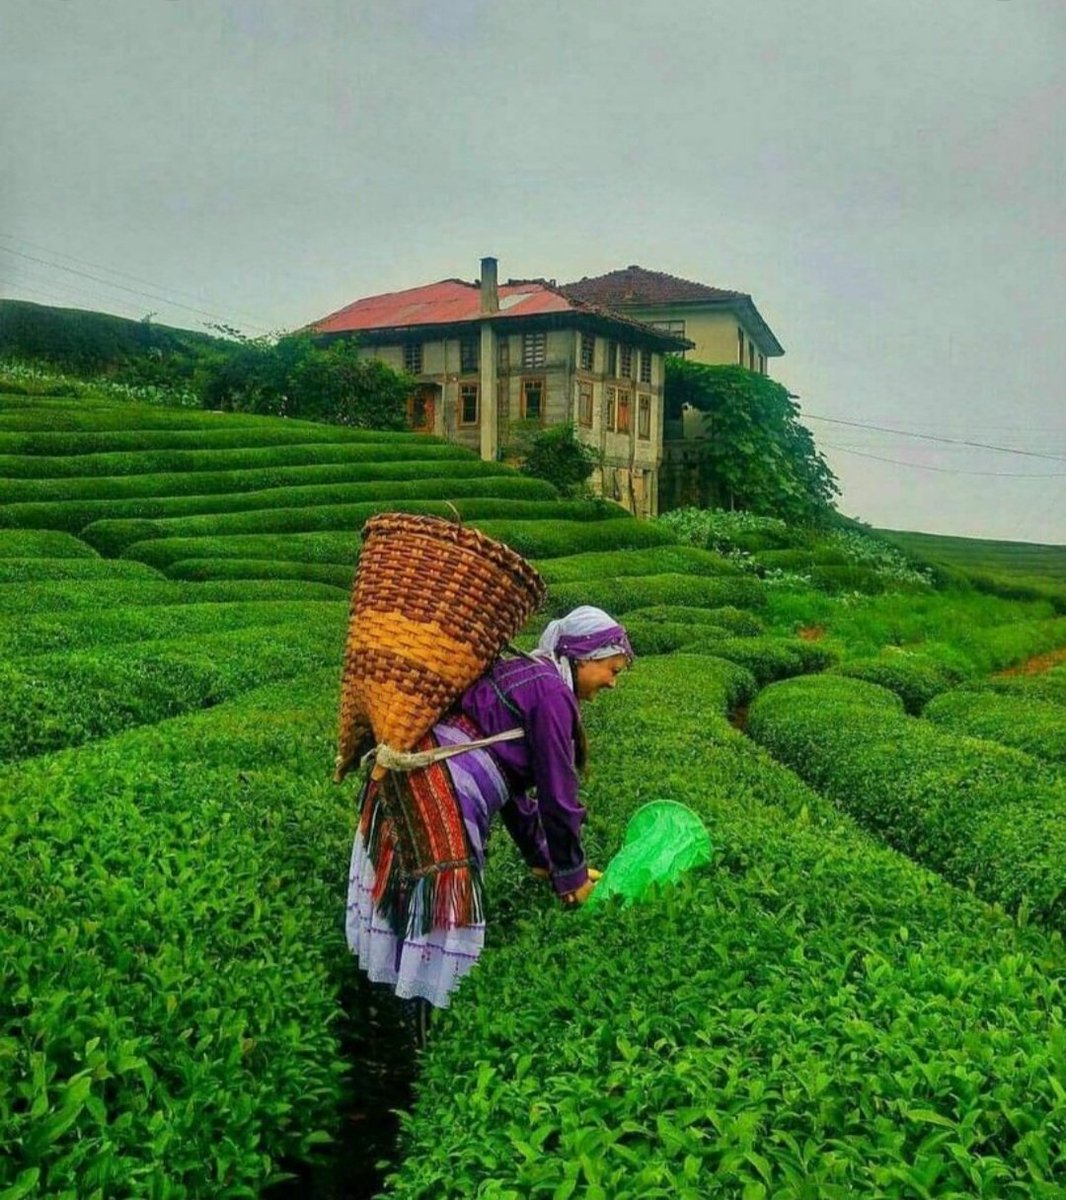 مزارع سرسبز چای لاهیجان در استان گیلان